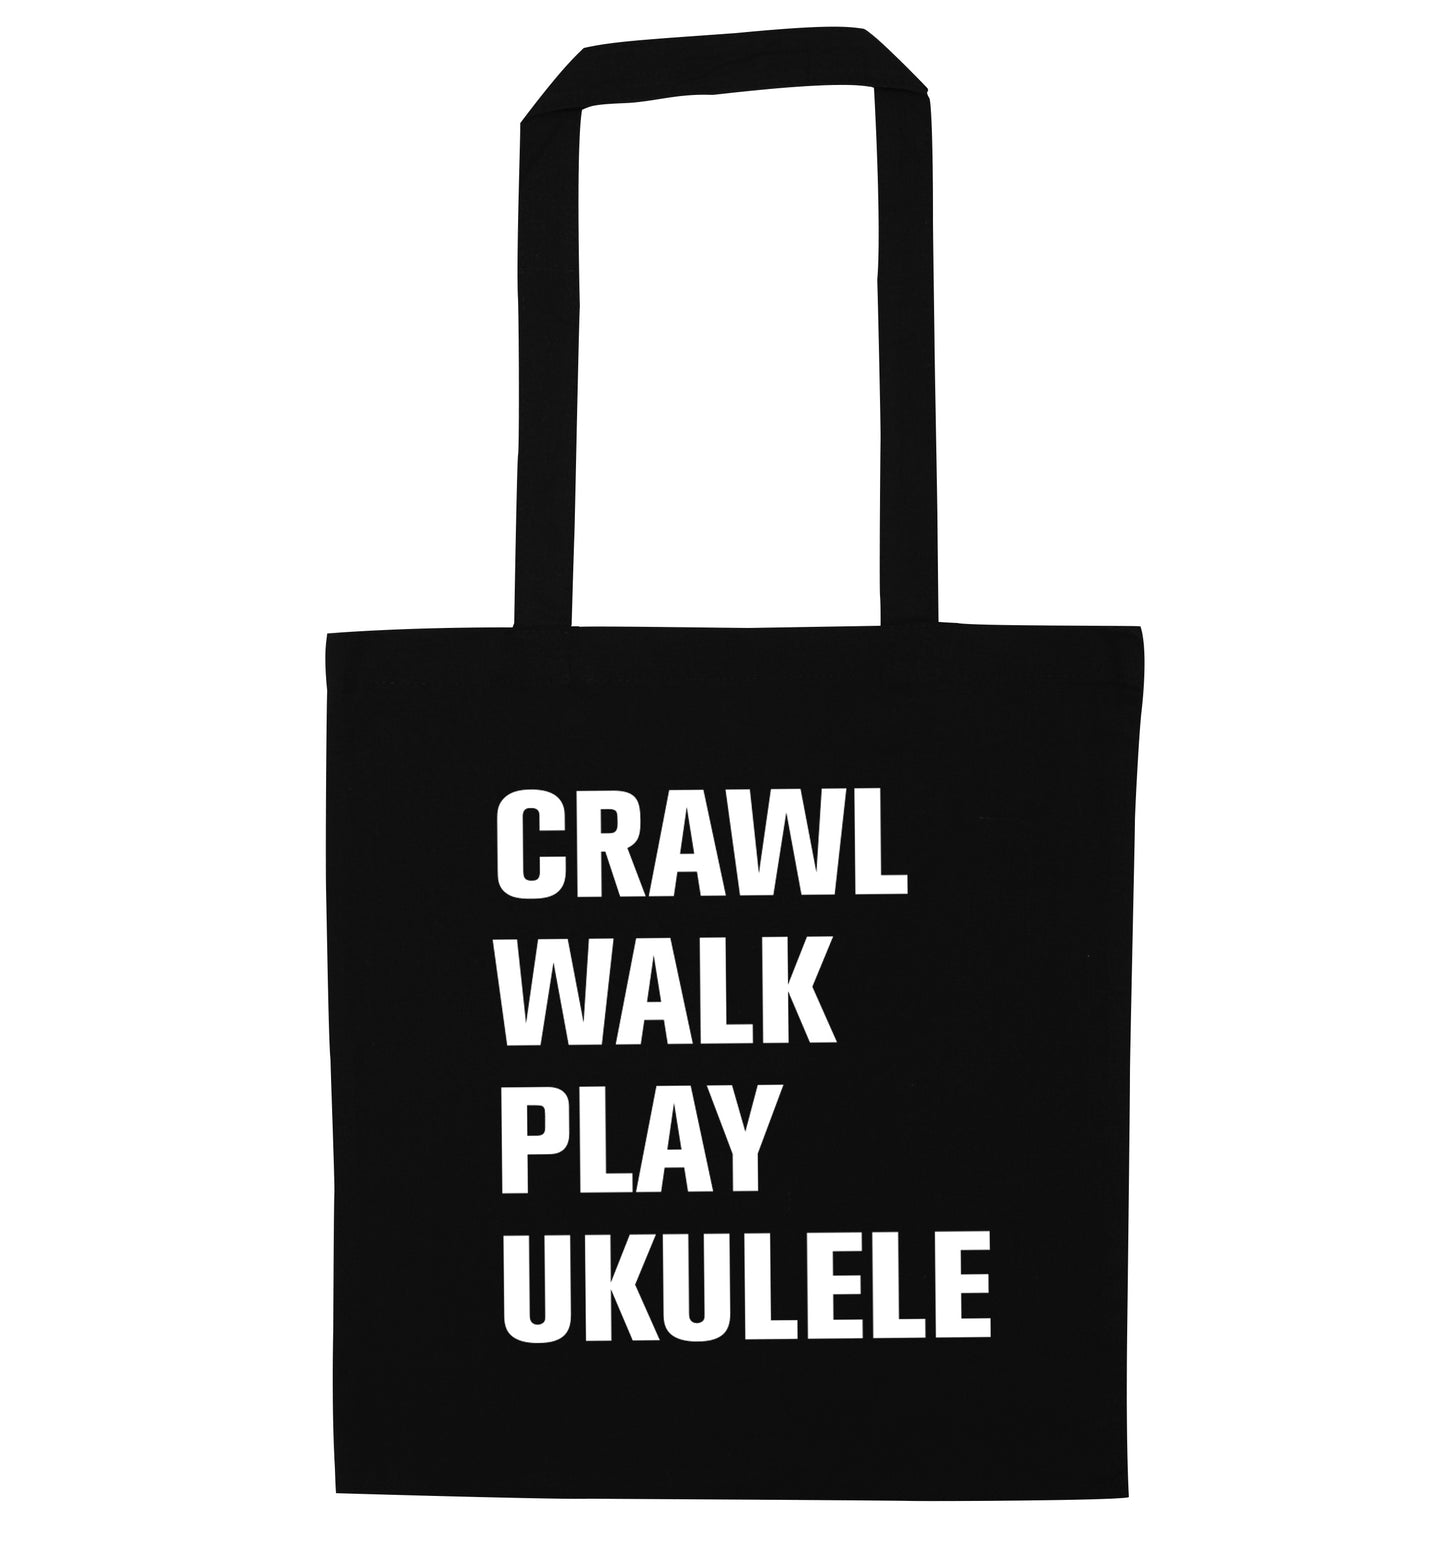 Crawl walk play ukulele black tote bag